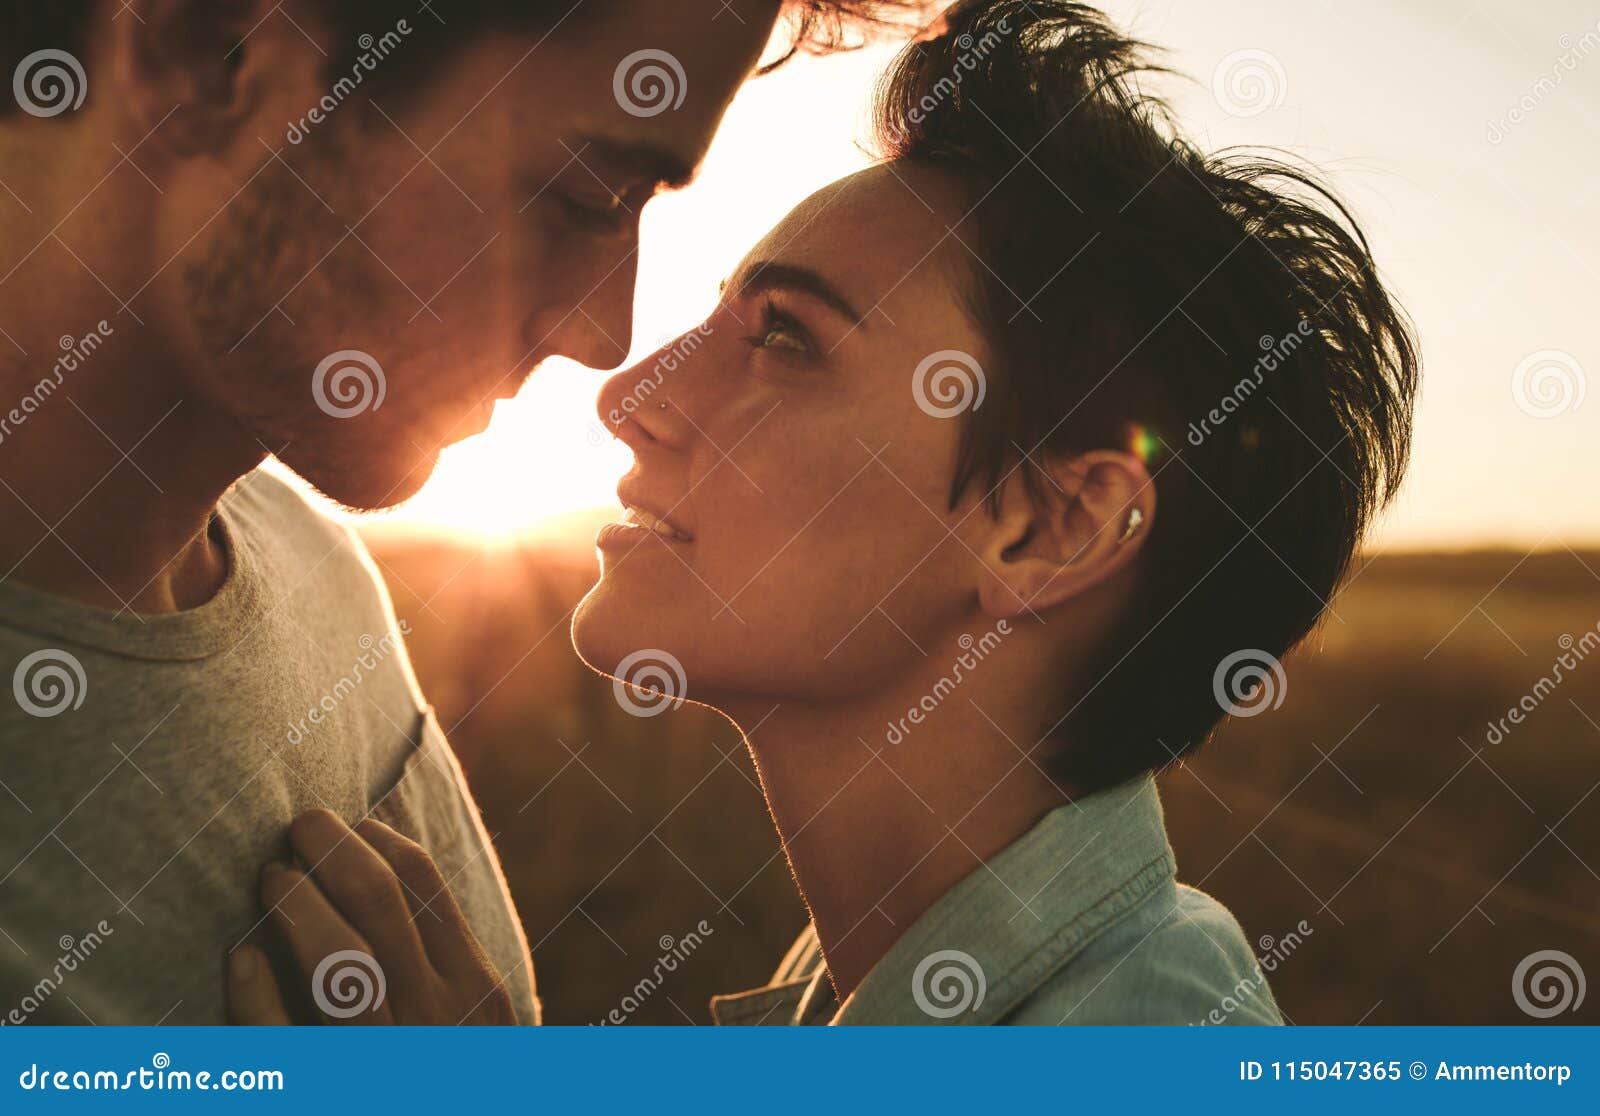 Romantic Couple Pose HD Wallpaper 27577 - Baltana